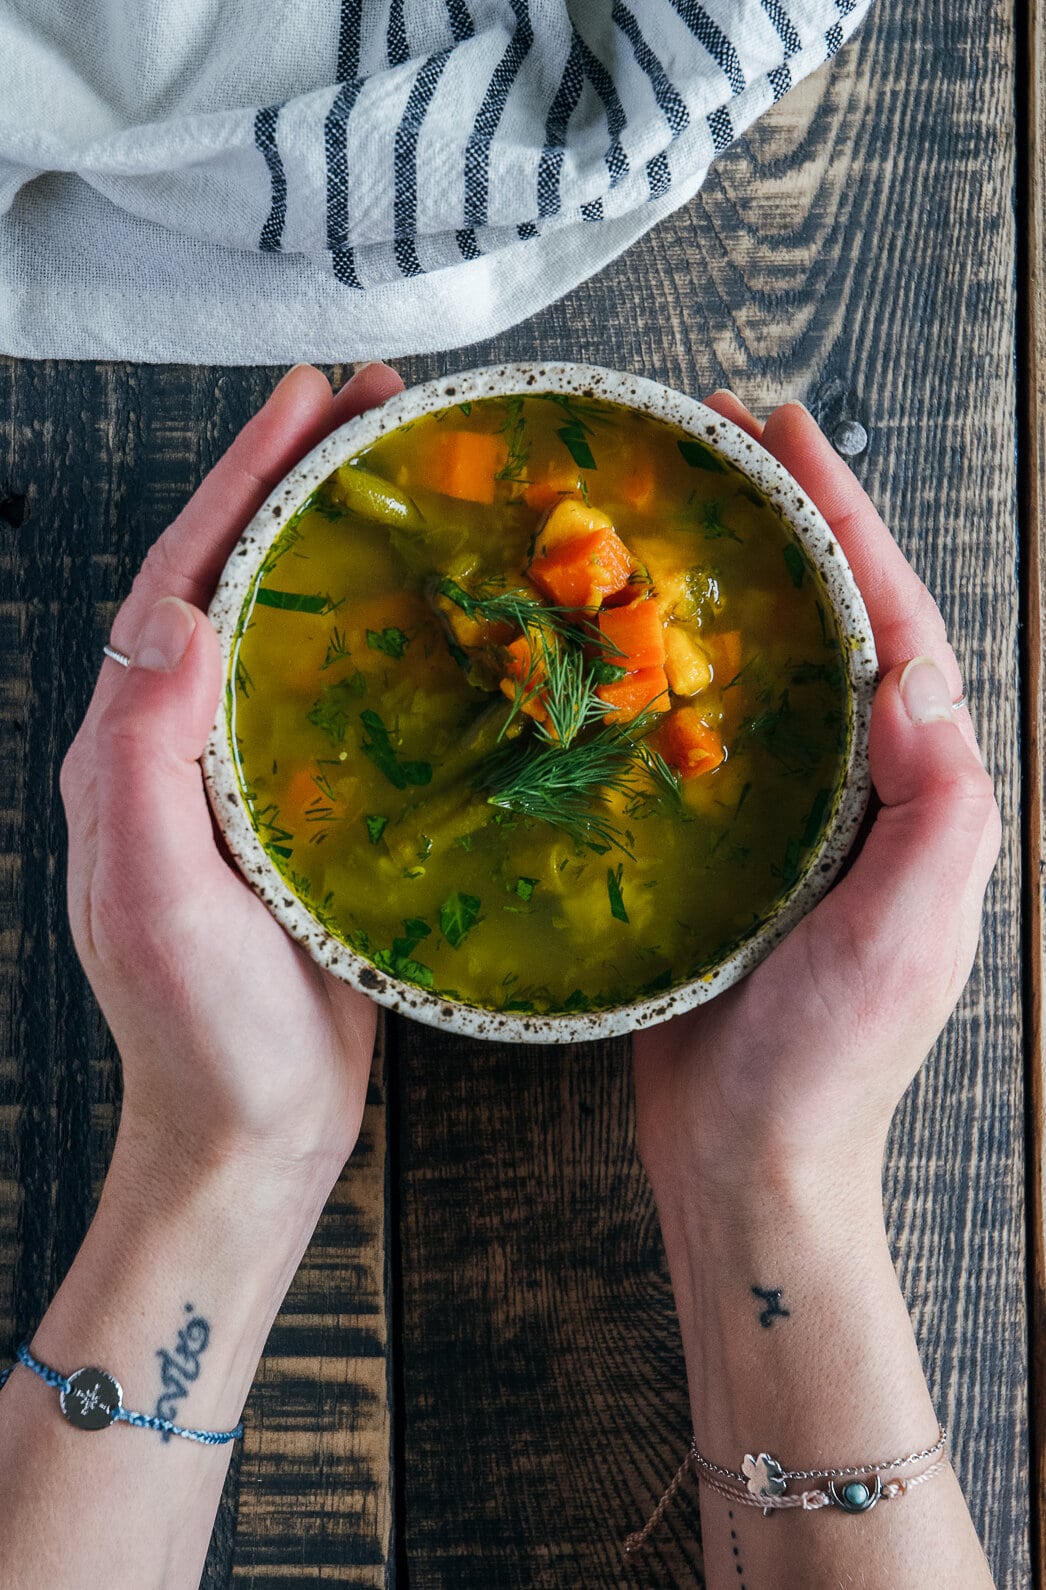 Bone Broth Vegetable Soup in bowl hands in hands